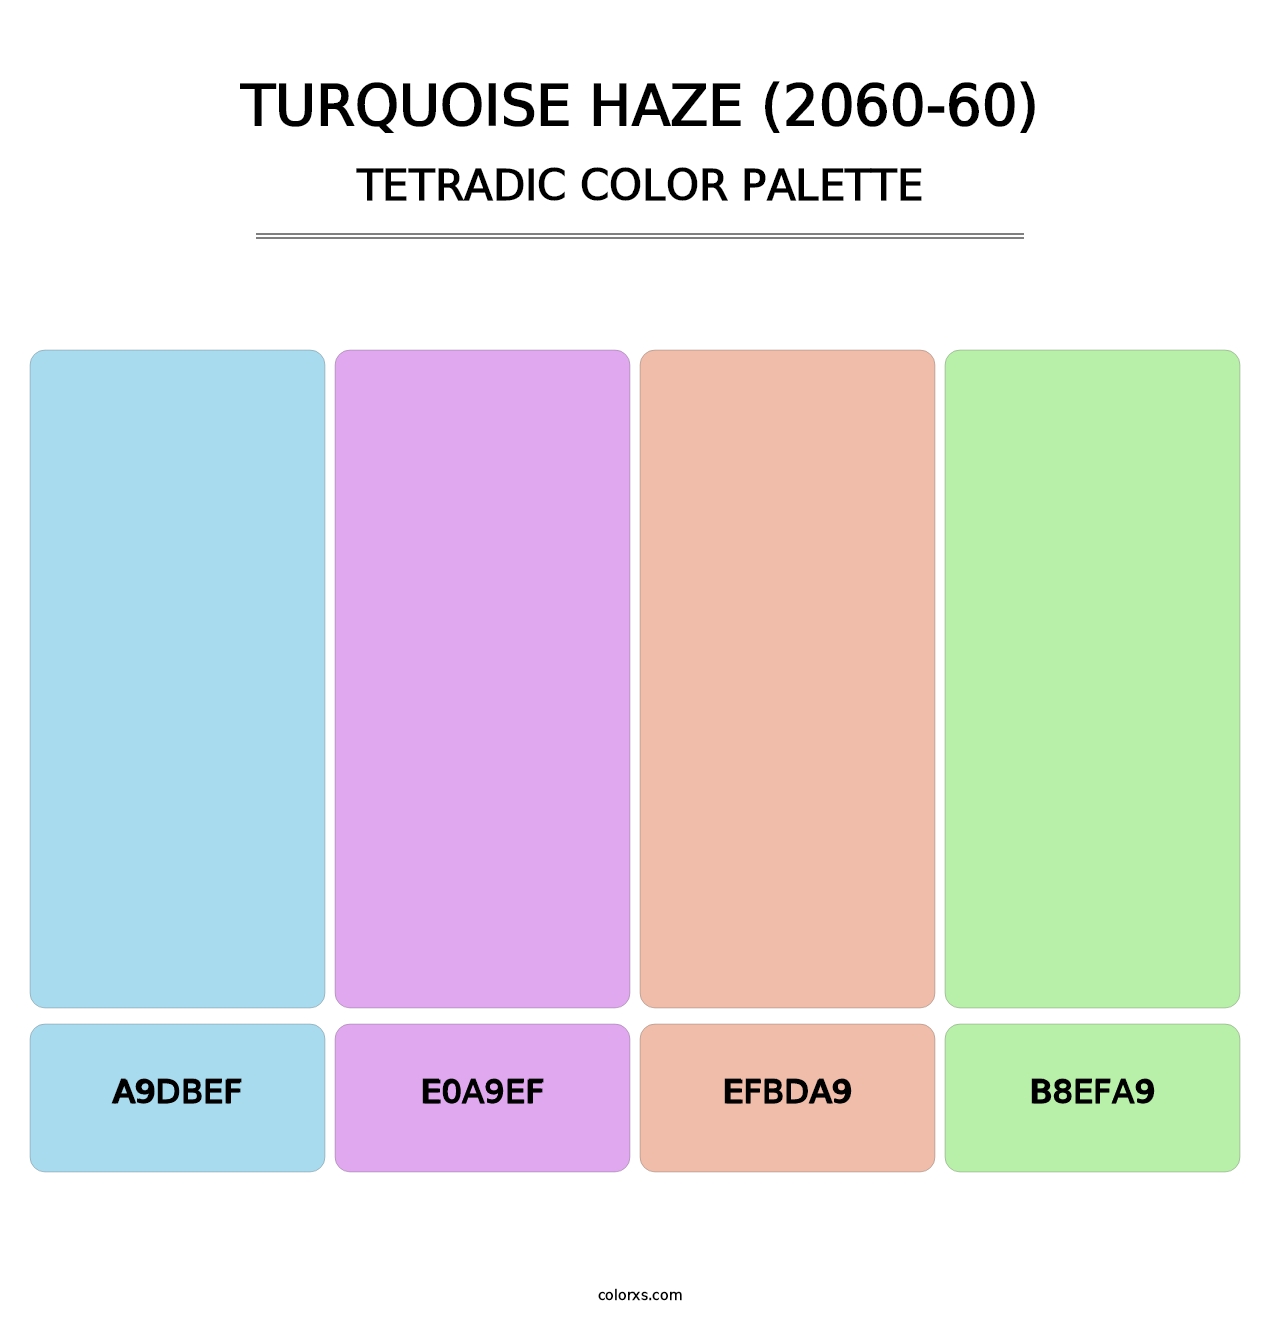 Turquoise Haze (2060-60) - Tetradic Color Palette